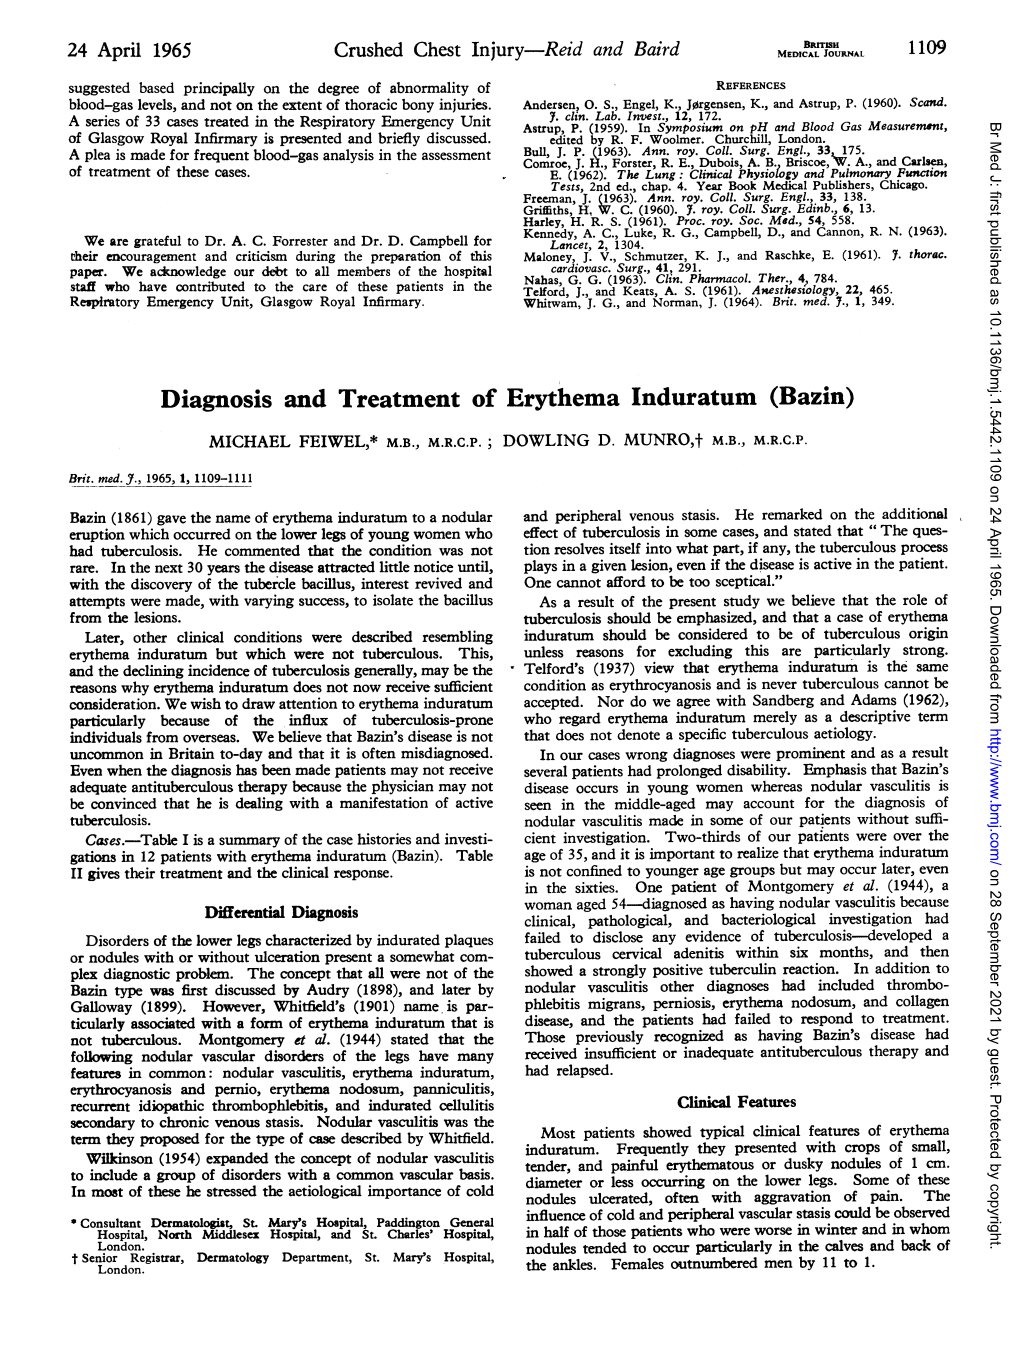 Diagnosis and Treatment of Erythema Induratum (Bazin) MICHAEL FEIWEL,* M.B., M.R.C.P.; DOWLING D